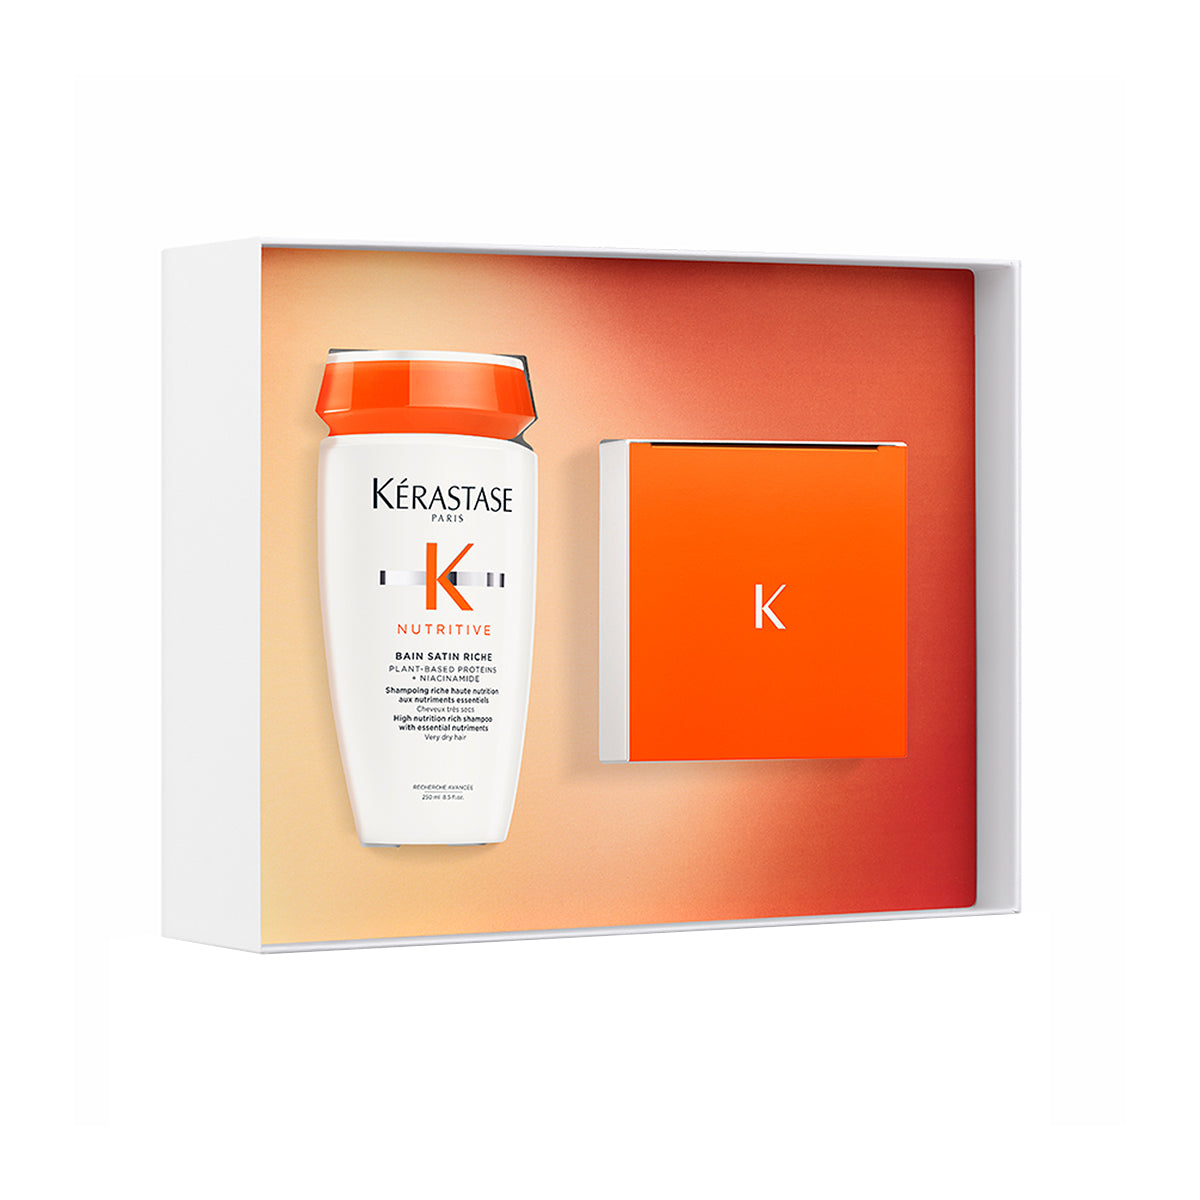 Kerastase Nutritive Limited Edition Σετ Περιποίησης για Πολύ Ξηρά Μαλλιά (Σαμπουάν 250ml,Μάσκα 200ml)